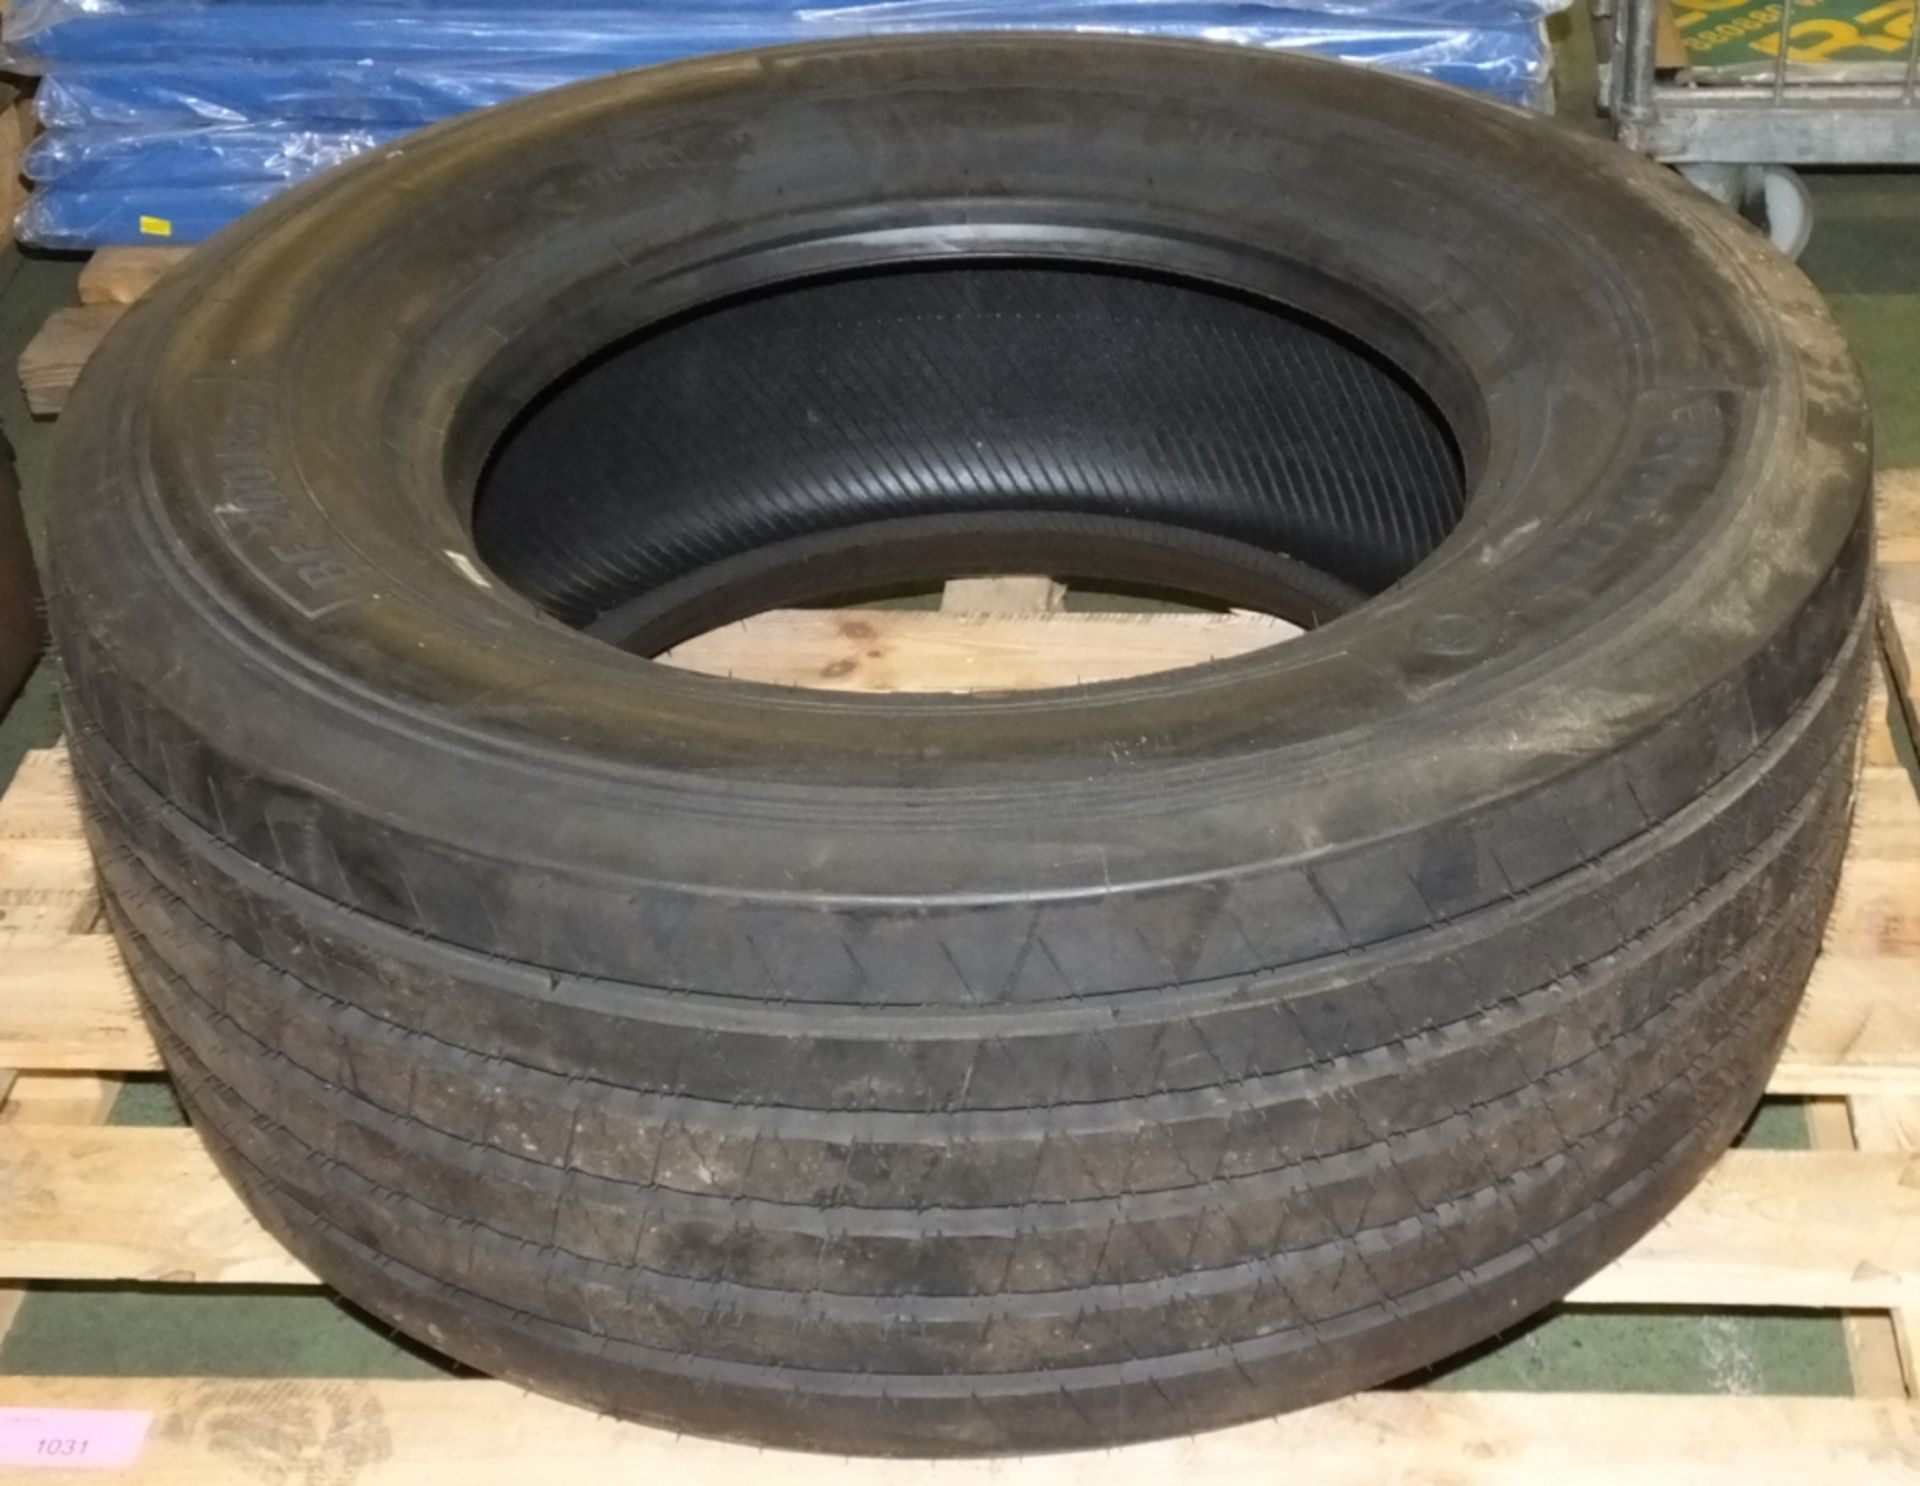 Barum BF 200 Road tire - 385/55 R 22.5 (new & unused)